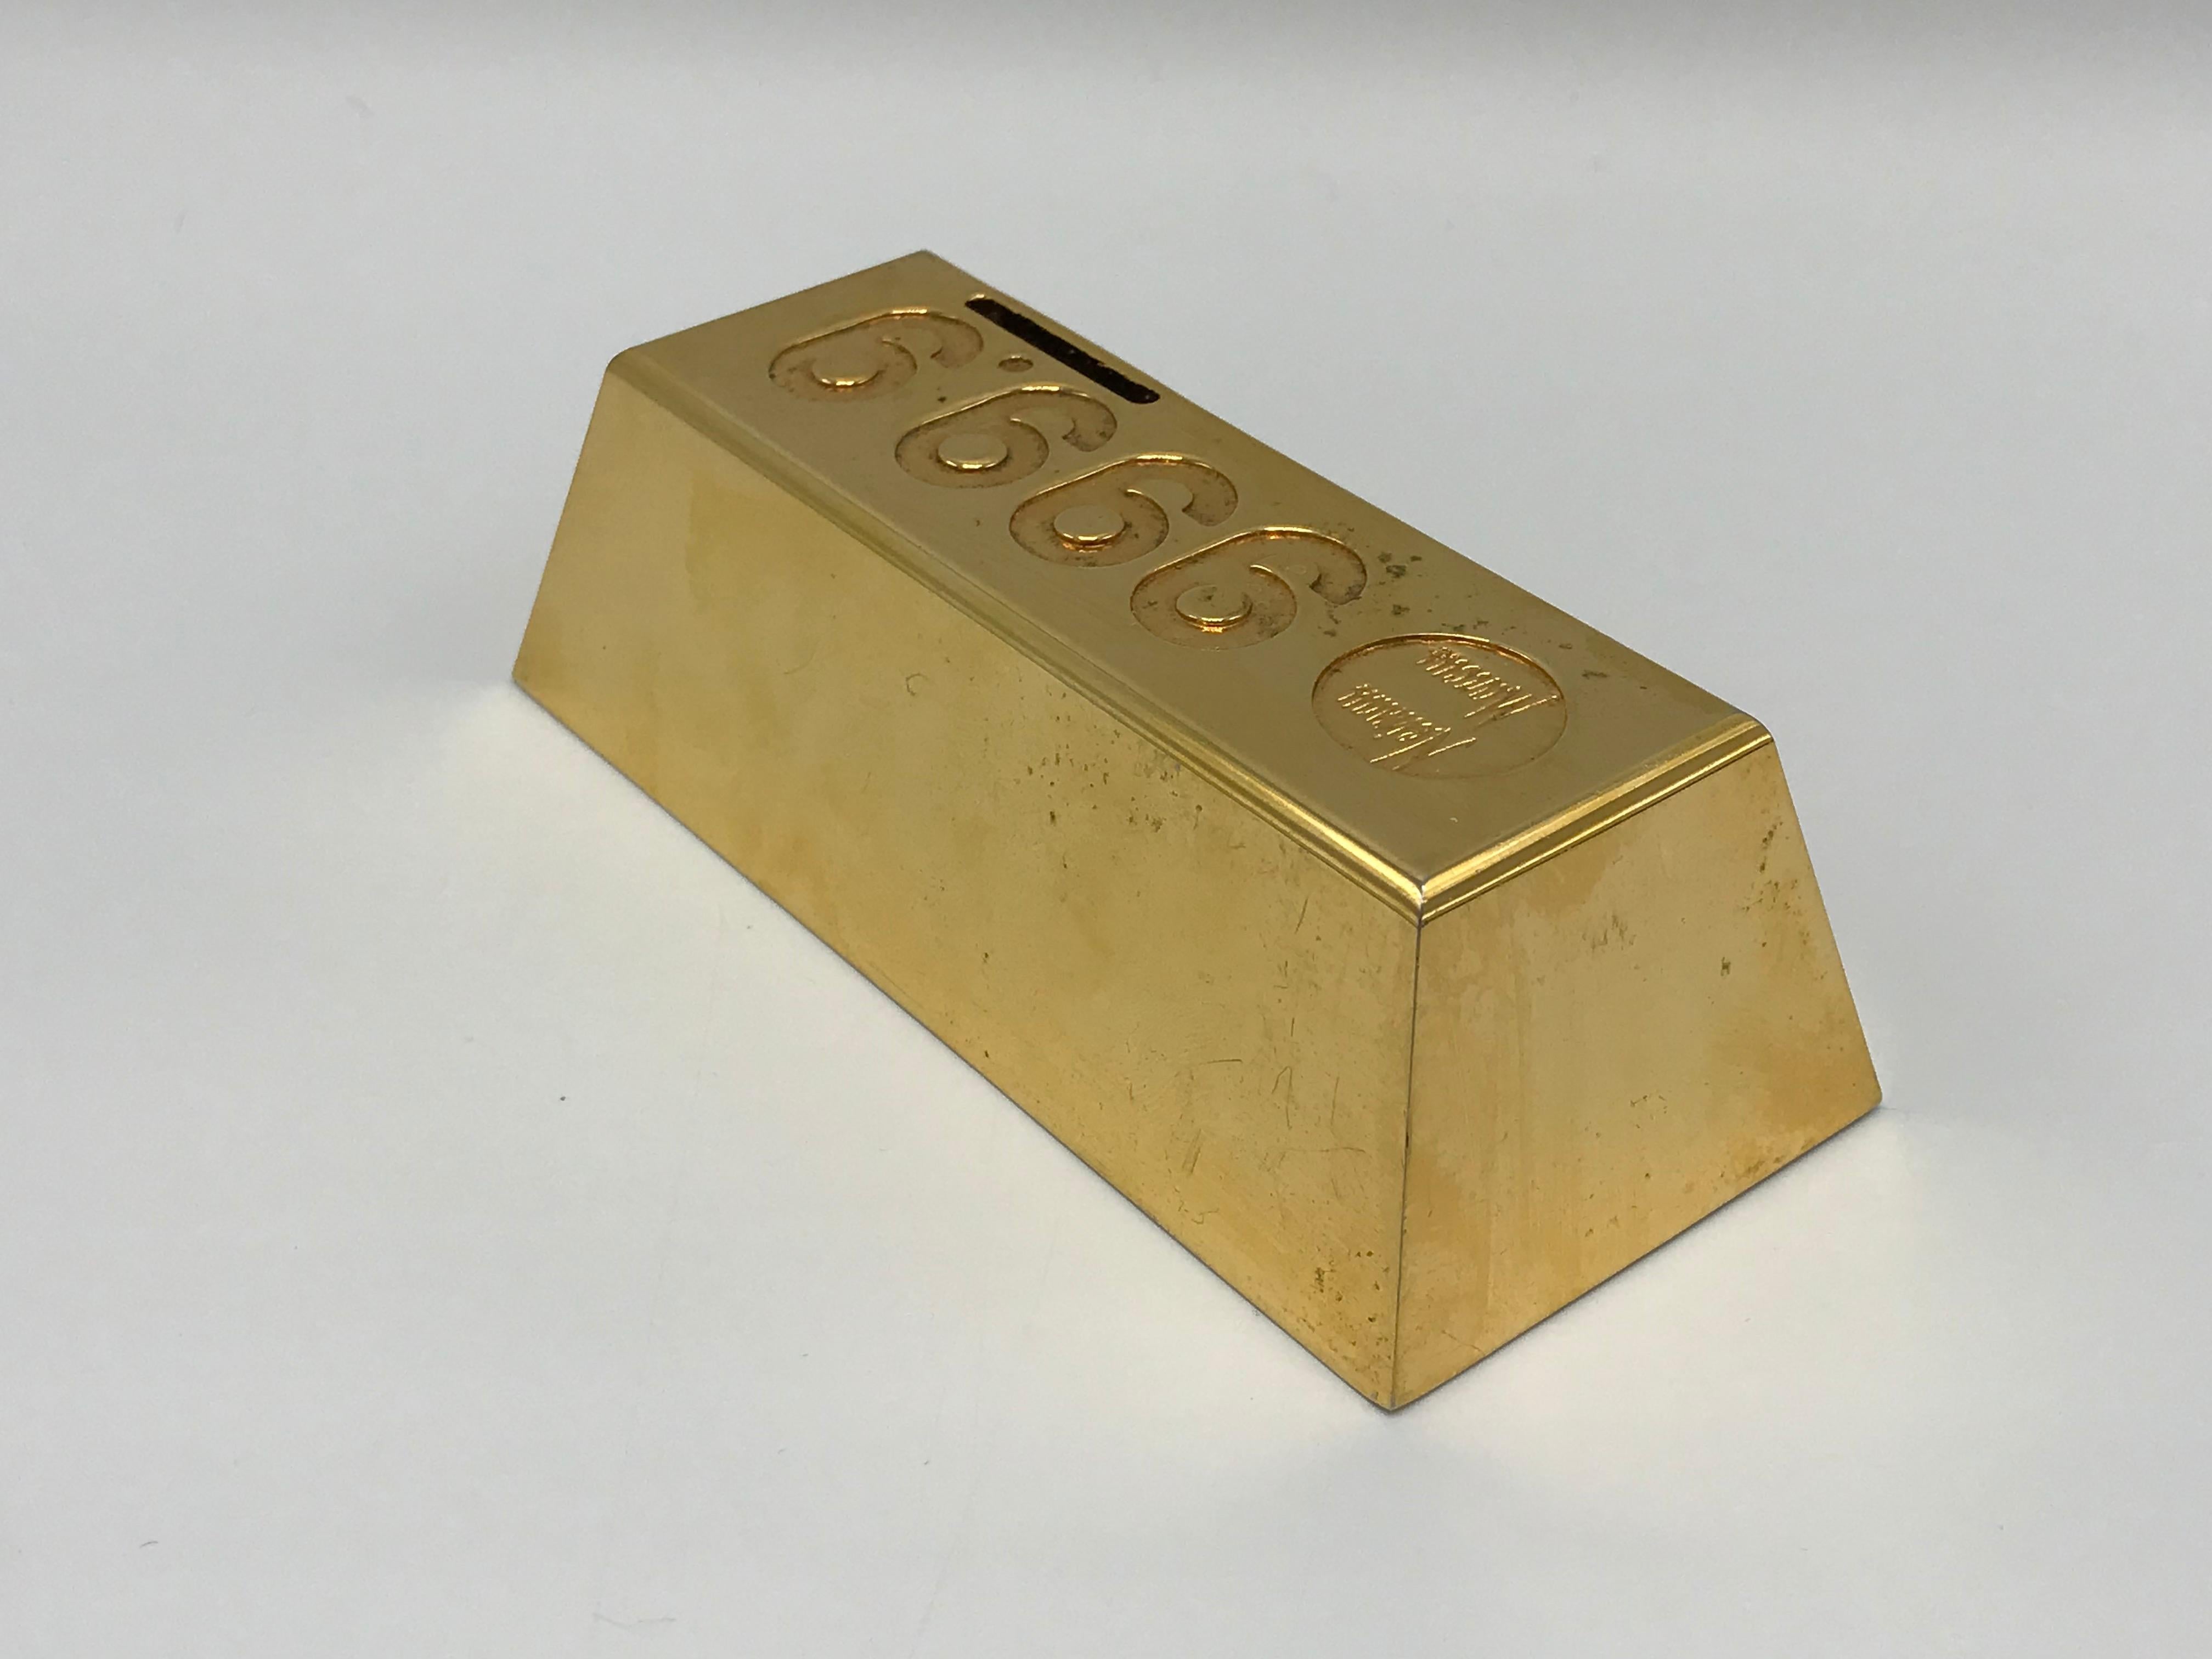 Modern 1980s Neiman Marcus Gold-Plated Brick Desktop Bank For Sale